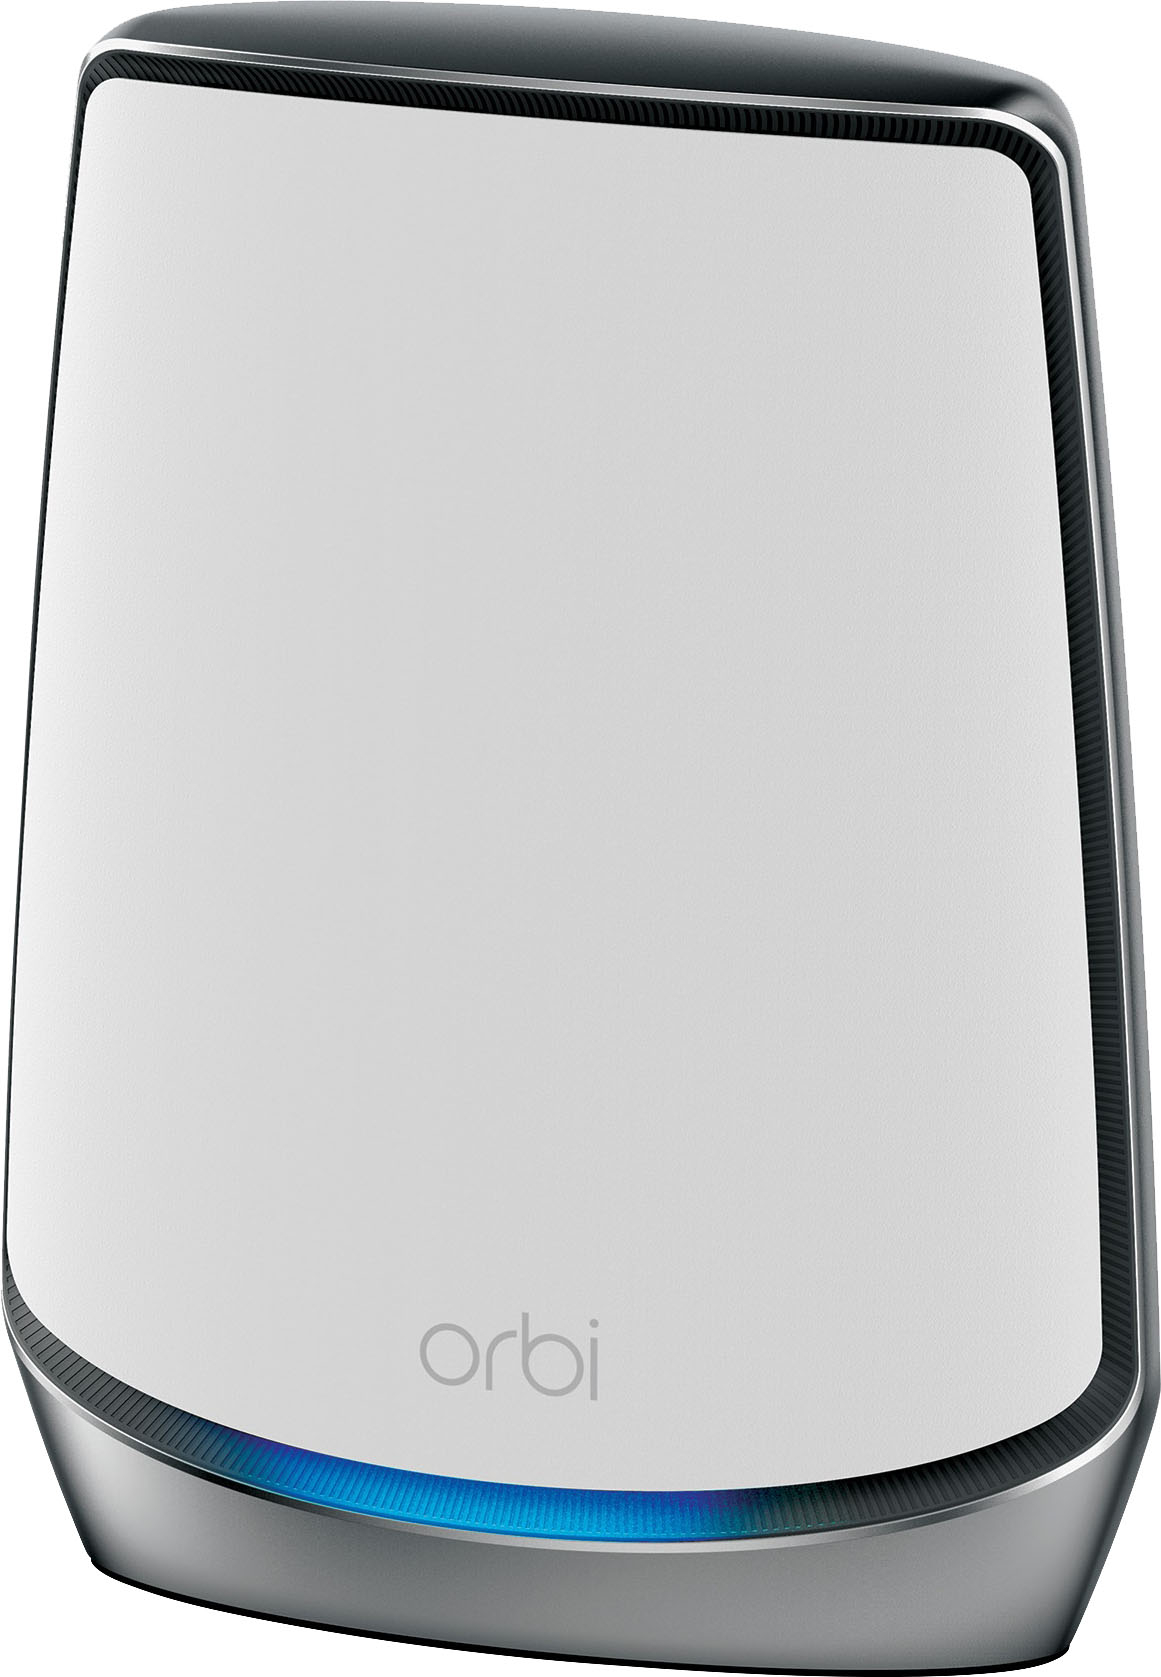  Orbi - Soporte de pared WiFi 6, soporte de pared resistente de  metal compatible con Netgear Orbi WiFi 6 Router RBK852, RBS750, RBK752,  RBK853 (paquete de 2) : Electrónica